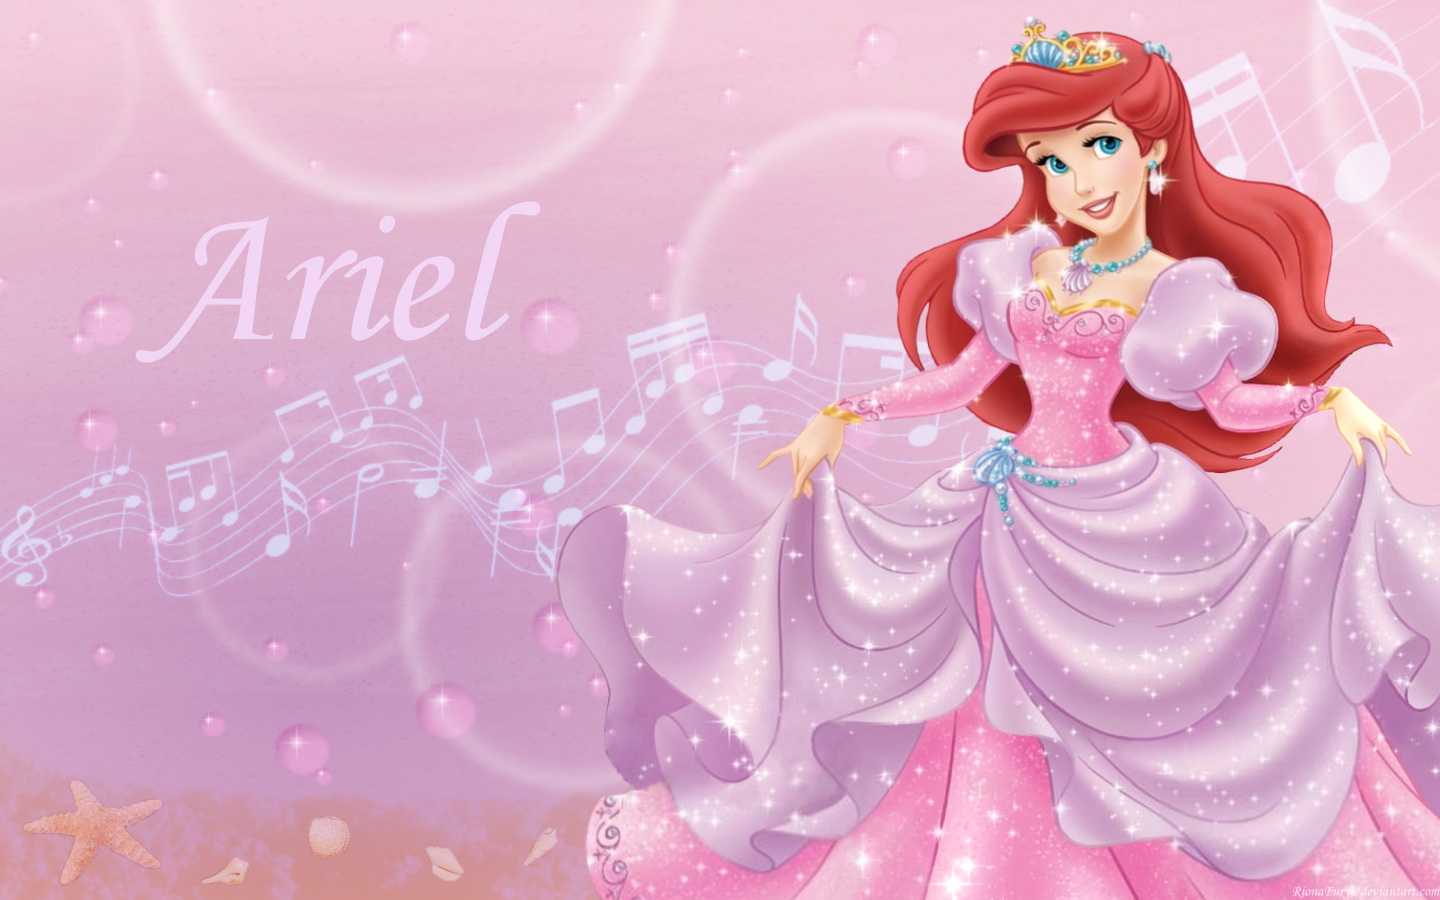 Pics Photos Disney Princess Ariel Wallpaper